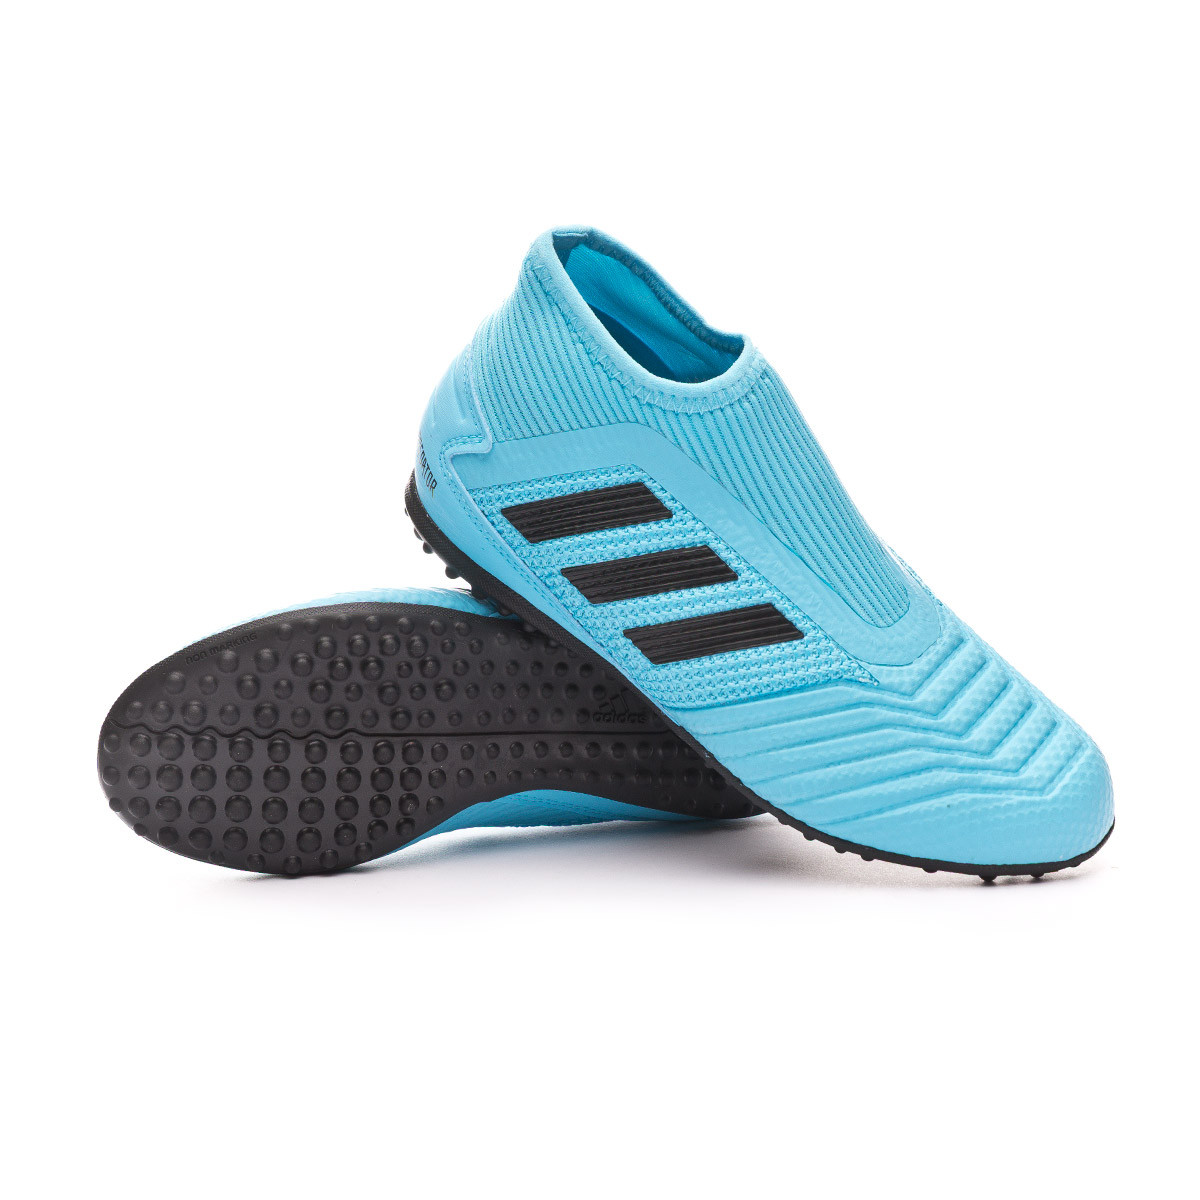 Football Boots adidas Predator 19.3 LL 